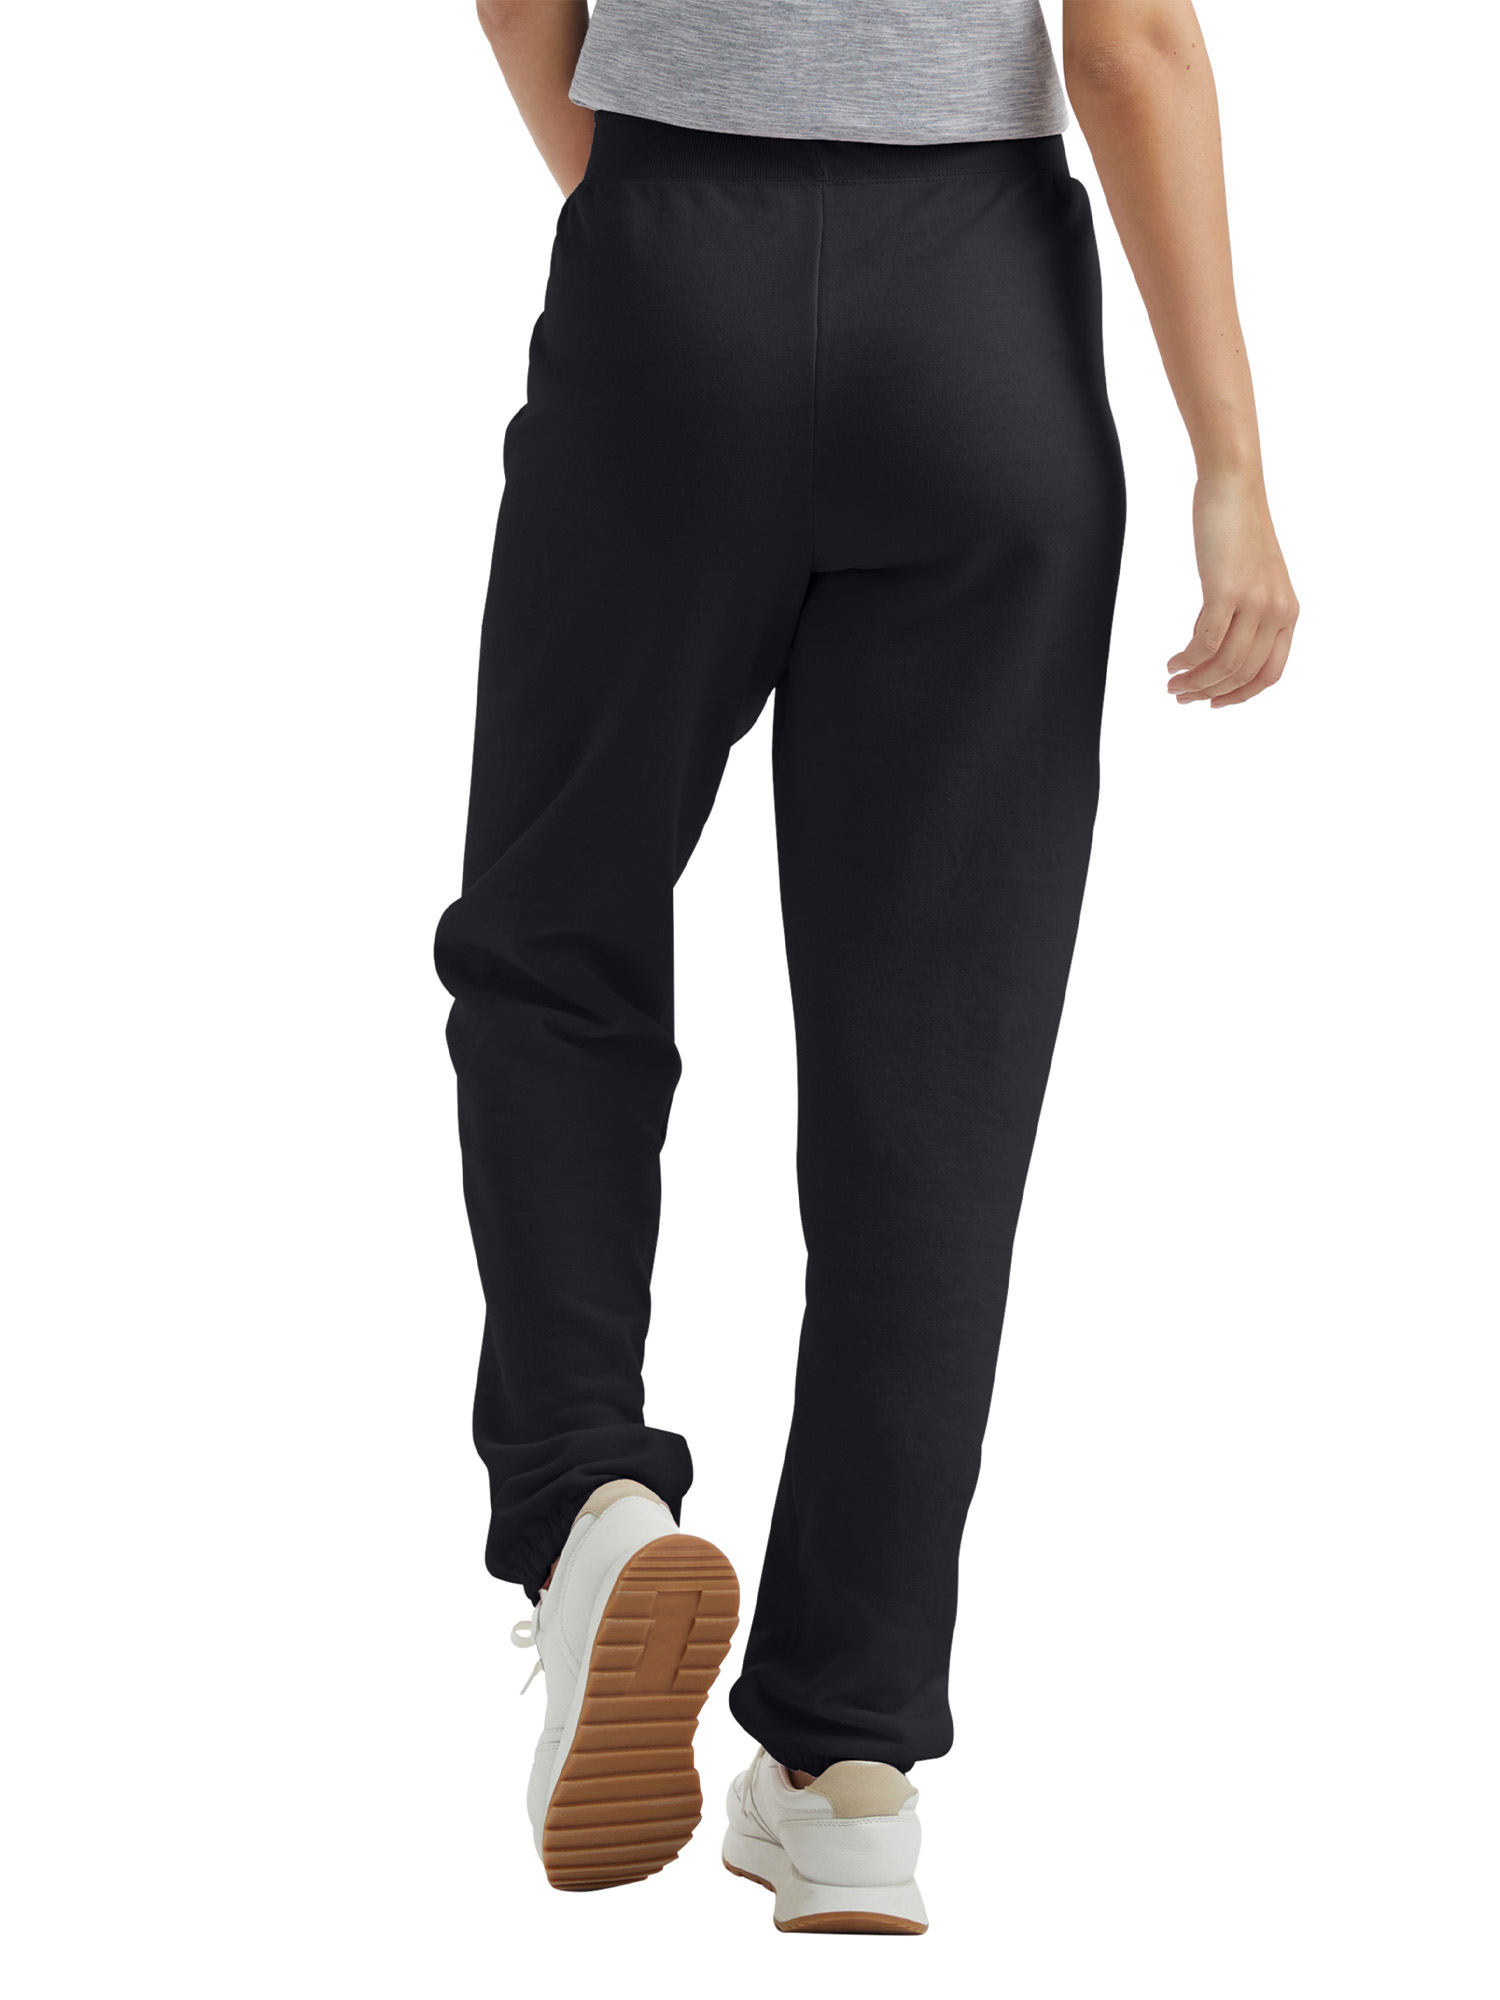 Hanes ComfortSoft Women's Sweatpants, 29” Inseam, Sizes S-XXL - image 2 of 6